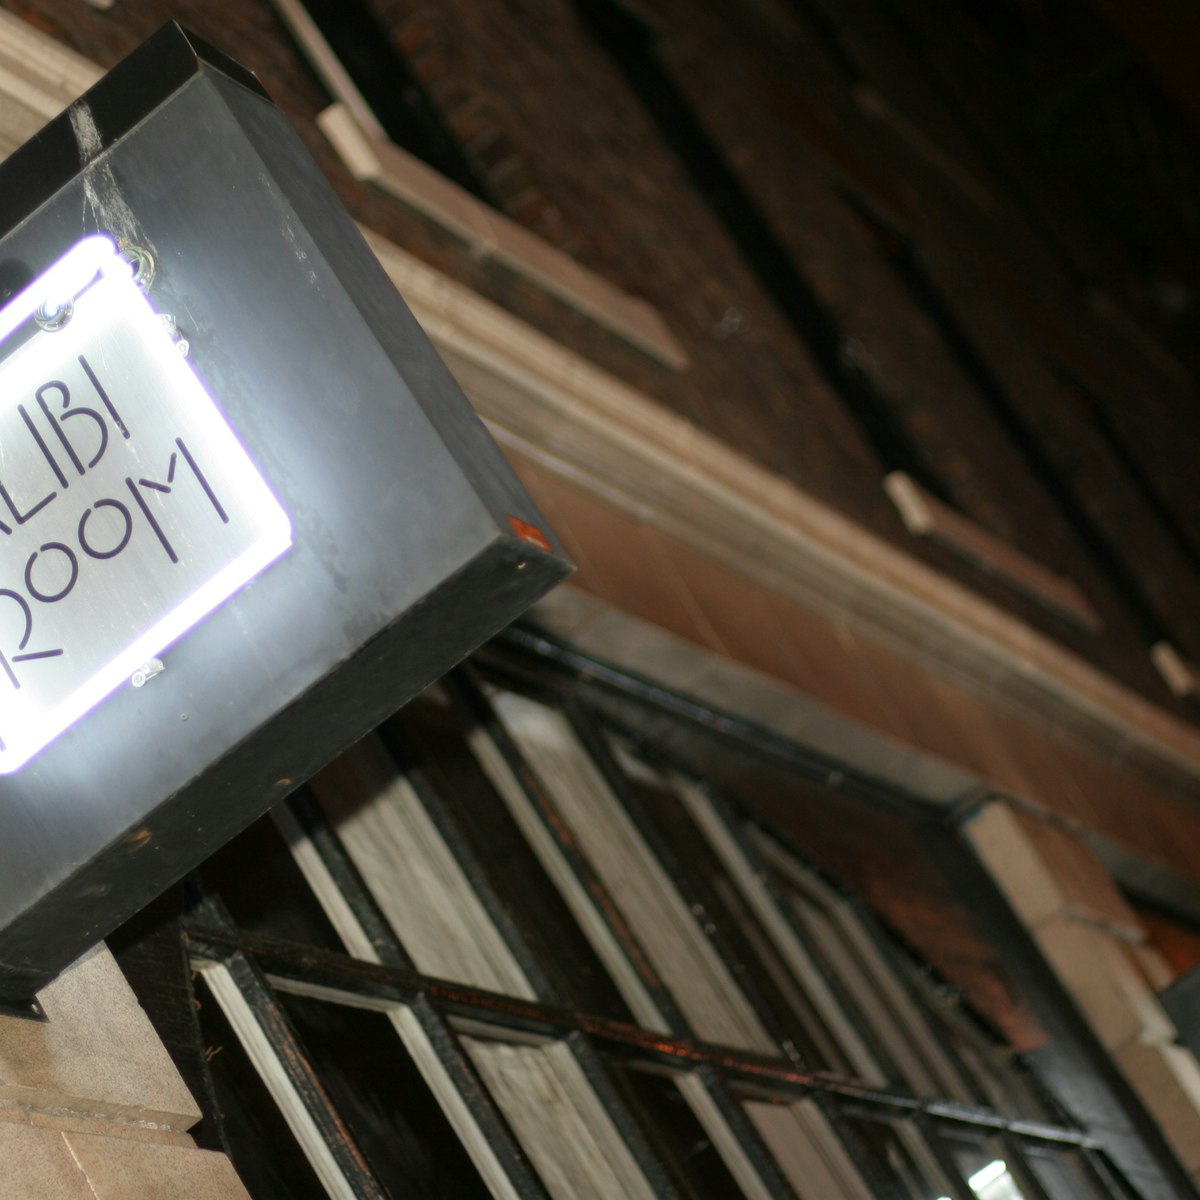 Alibi Room sign, lit at night, Gastown.